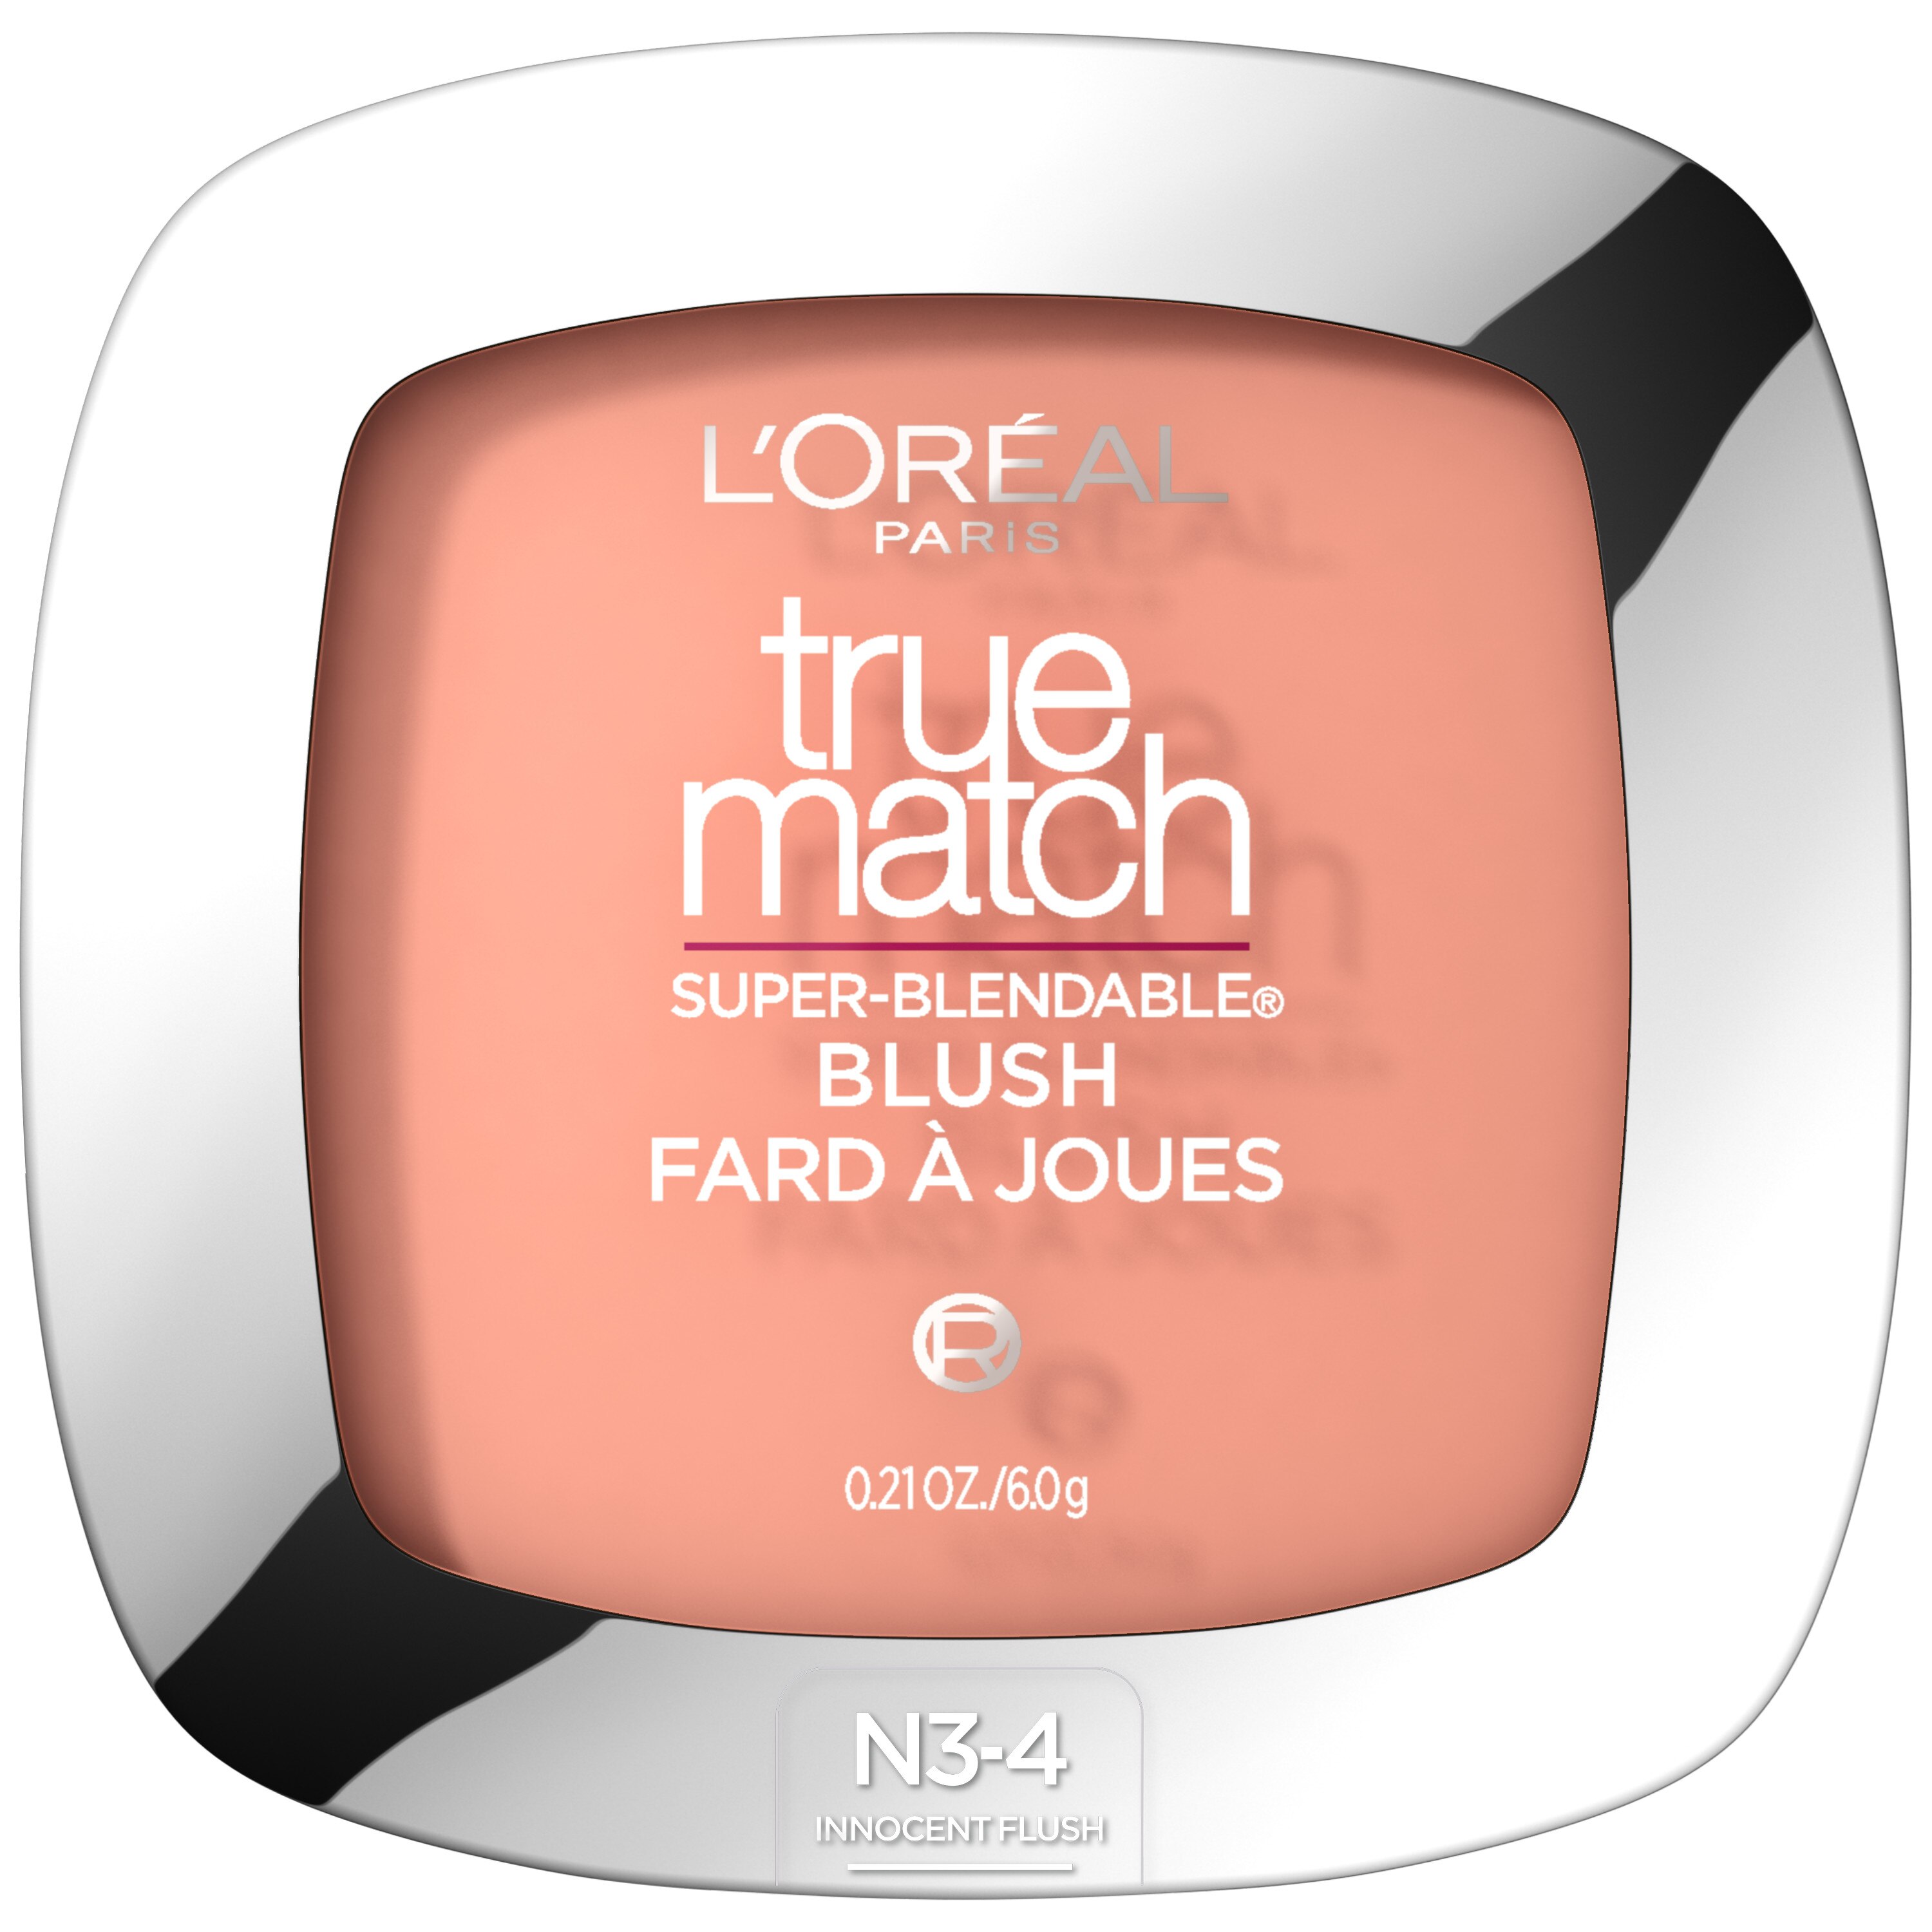 L'Oreal Paris True Match Super-Blendable Blush, N3-4 Innocent Flush , CVS